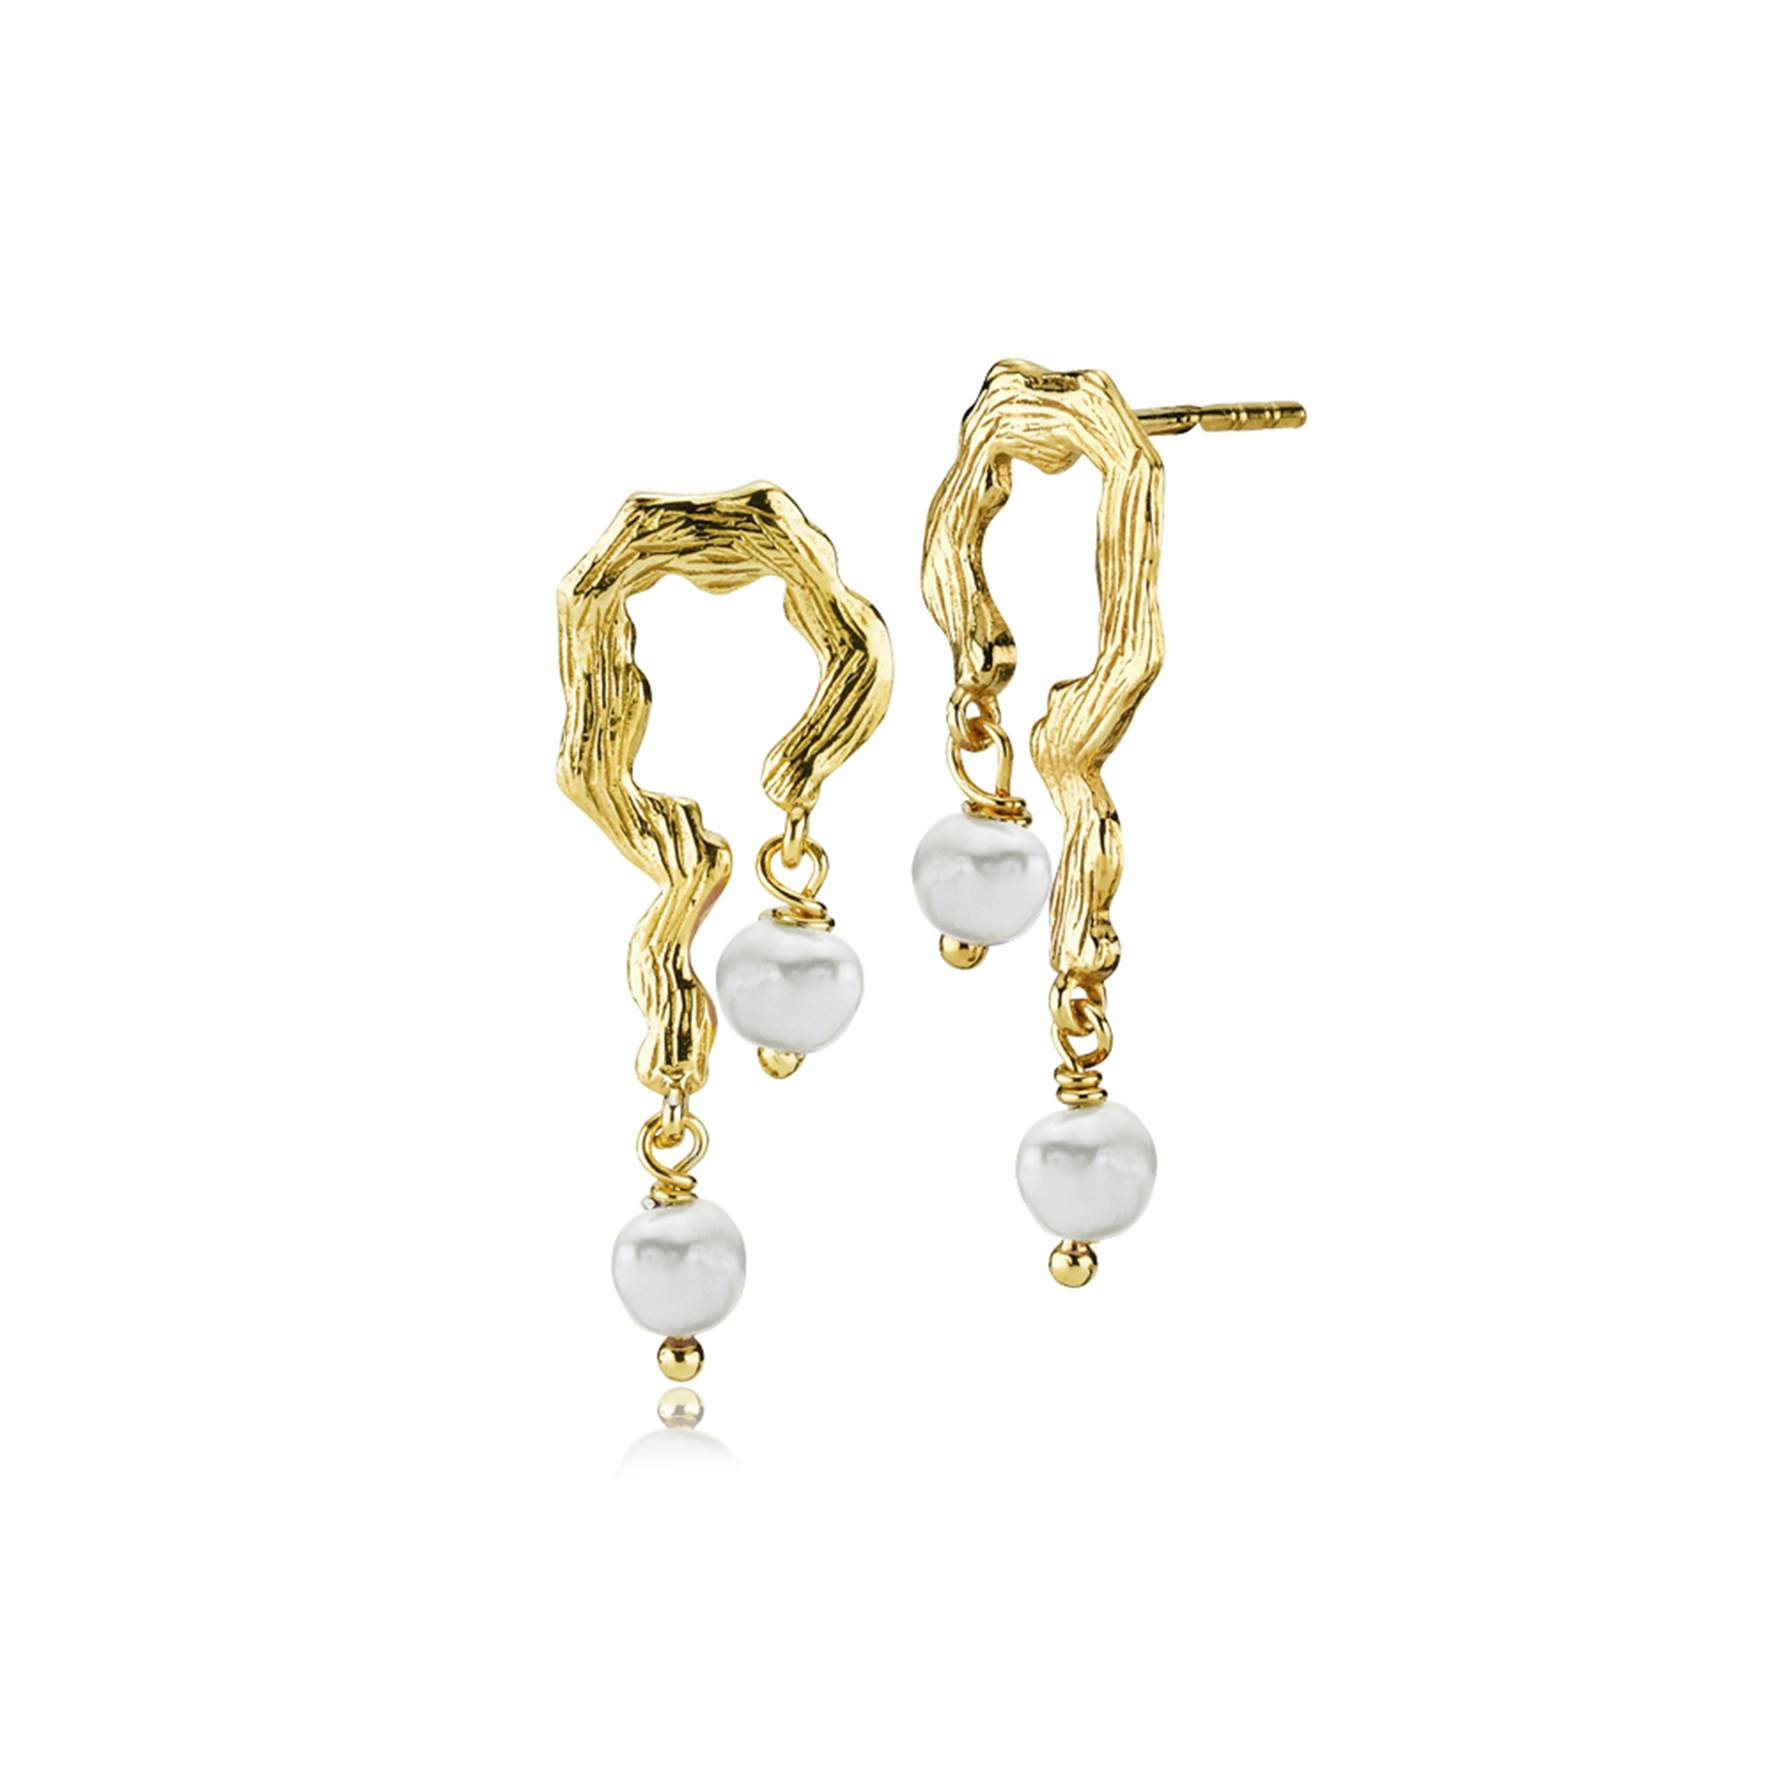 Lærke Bentsen By Sistie Earrings With Pearls from Sistie in Goldplated-Silver Sterling 925|Freshwater Pearl